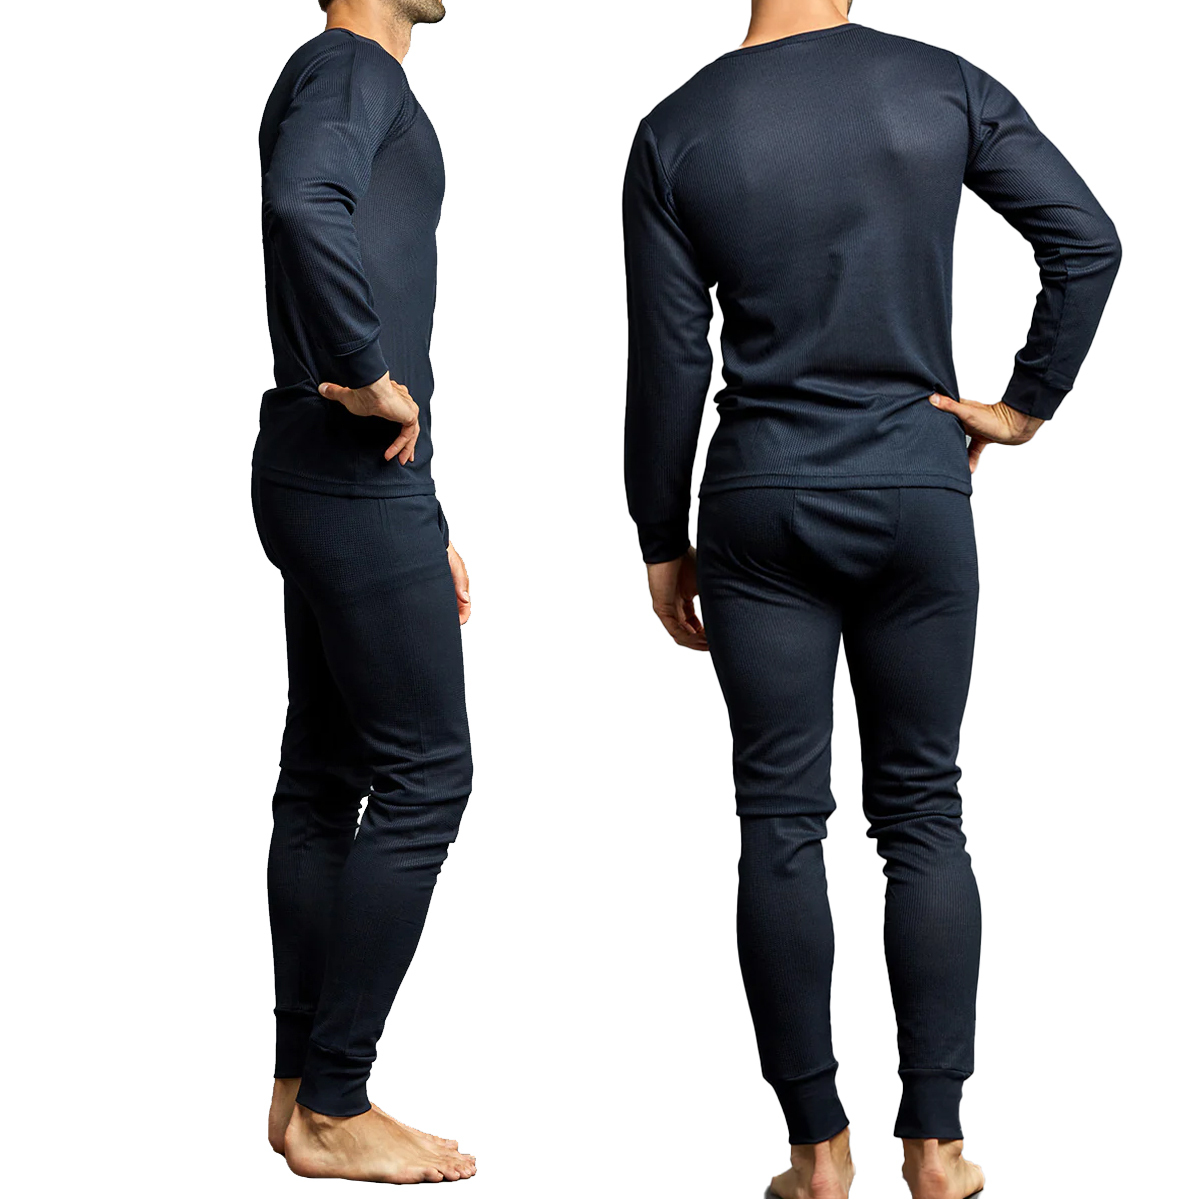 Men's Thermal Underwear Sets - Medium, Navy